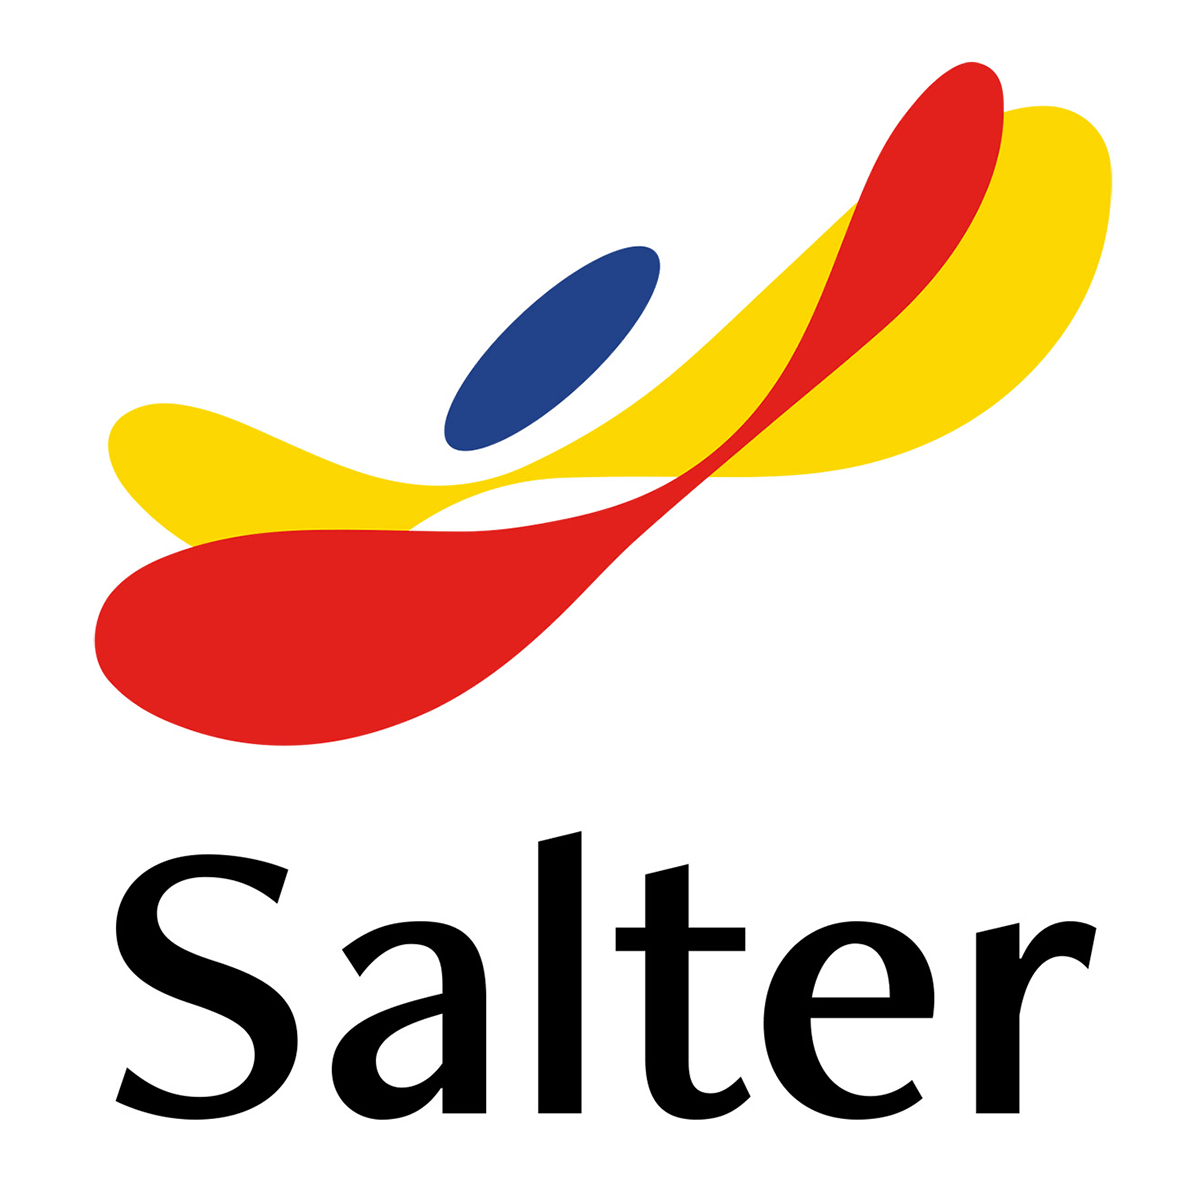 Salter Logo_Ethan Salter_Resized.png